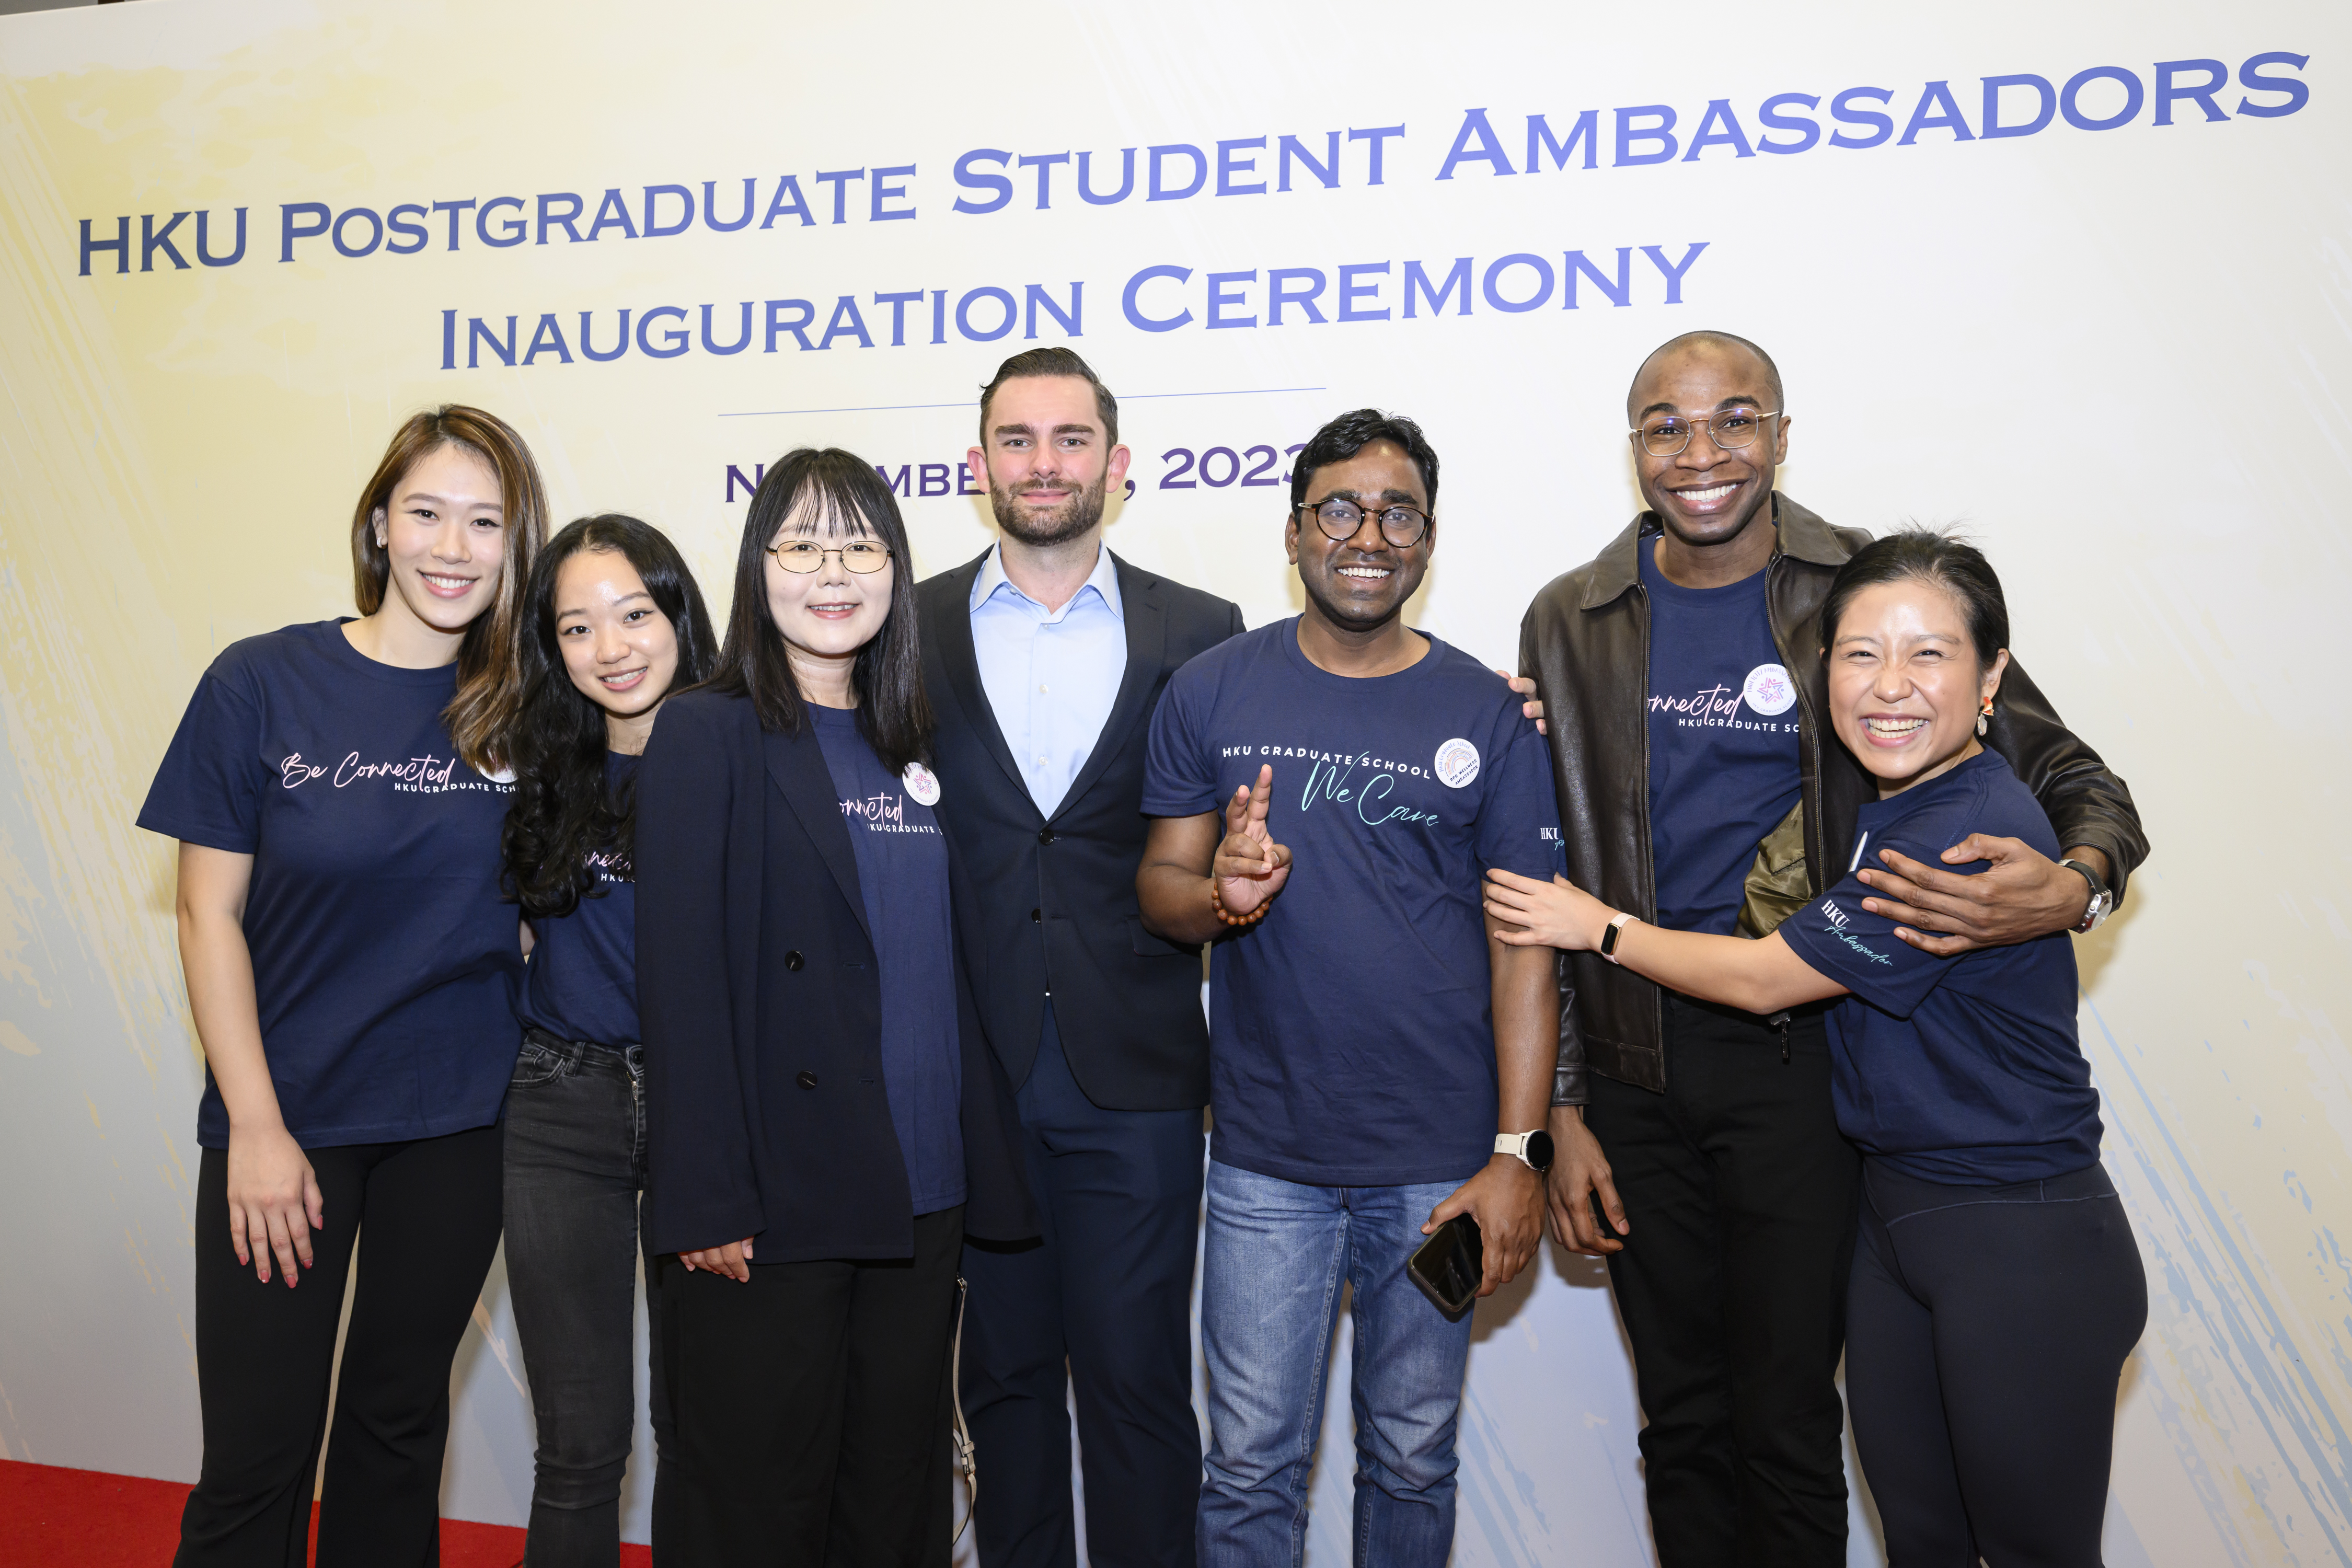 Postgraduate student ambassadors. 